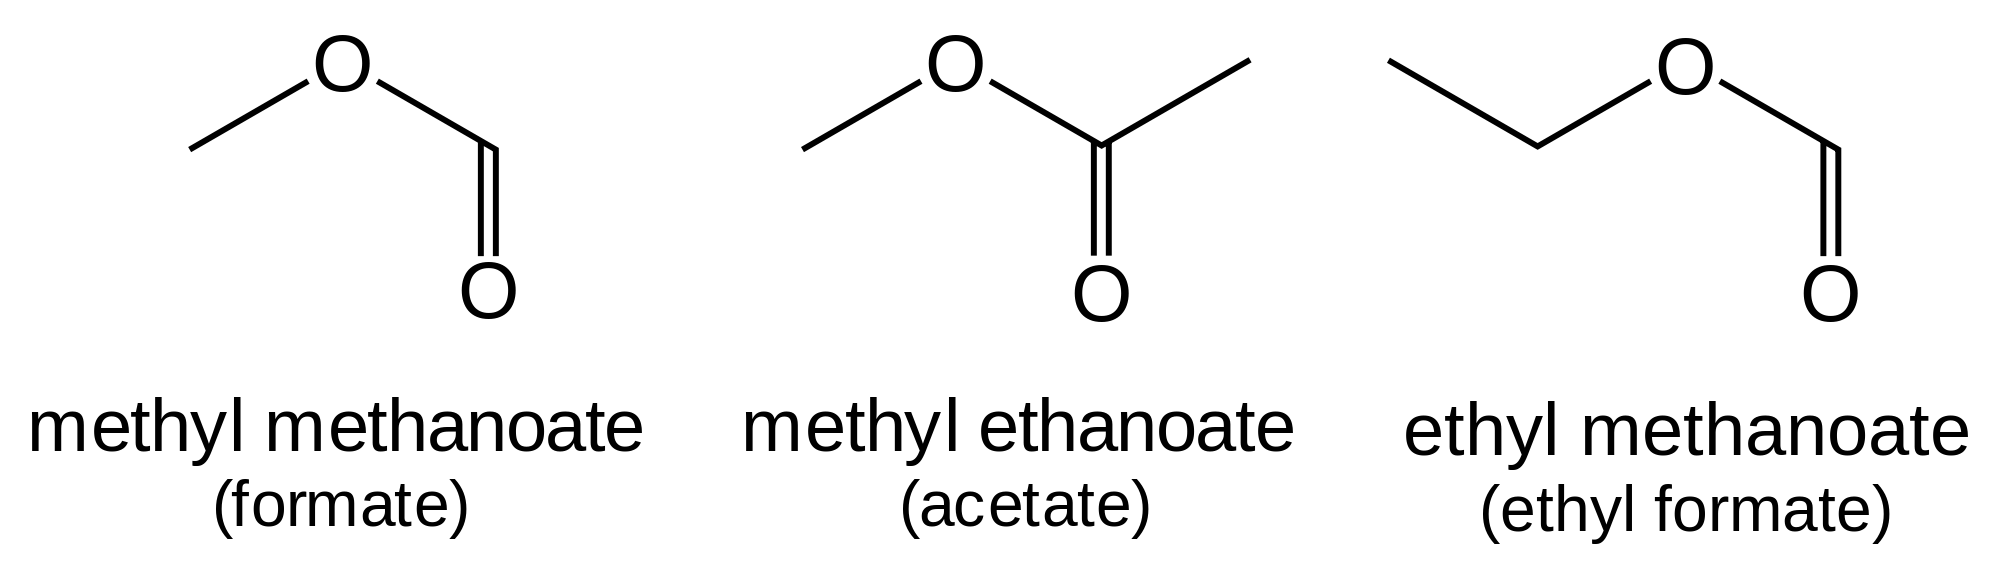 Формиат этил. Ацетат анион. Ethyl methanoate. Hcooch3 структурная формула. Метилметаноат формула.